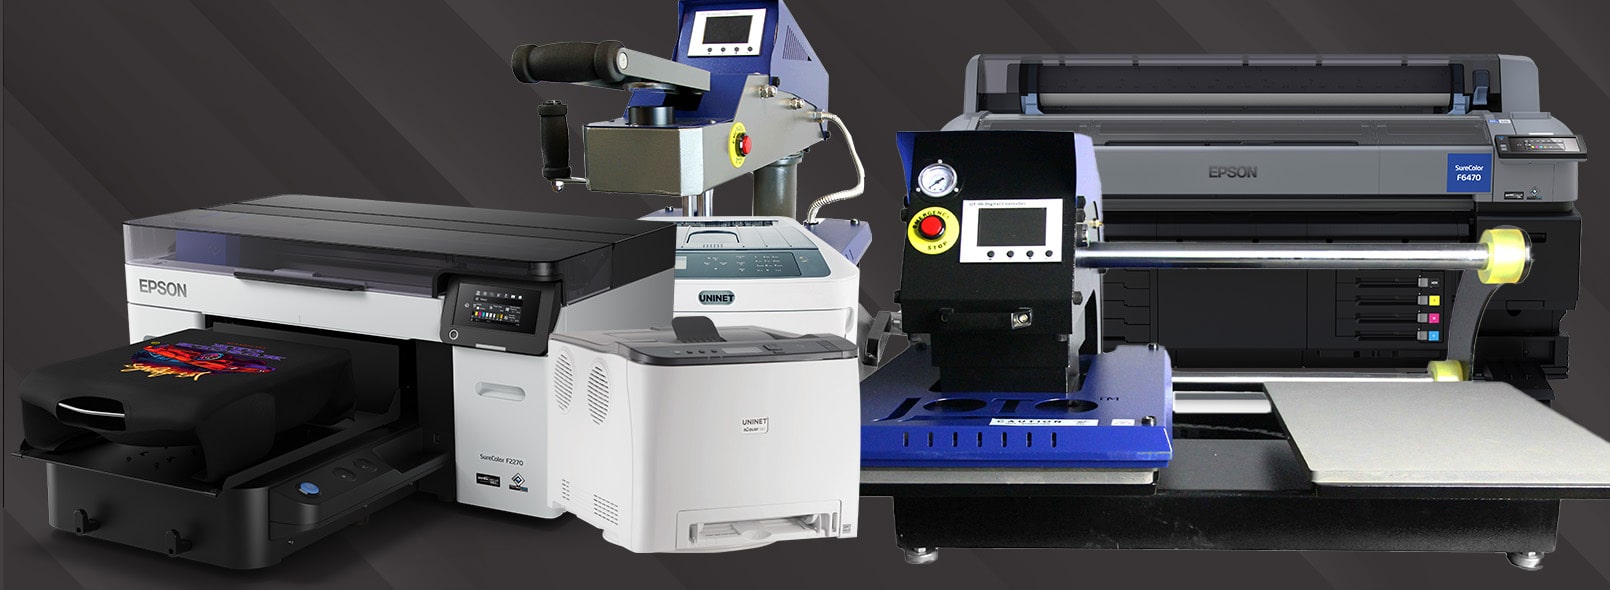 Epson's Mug Presses and Printers - Joto Imaging Supplies